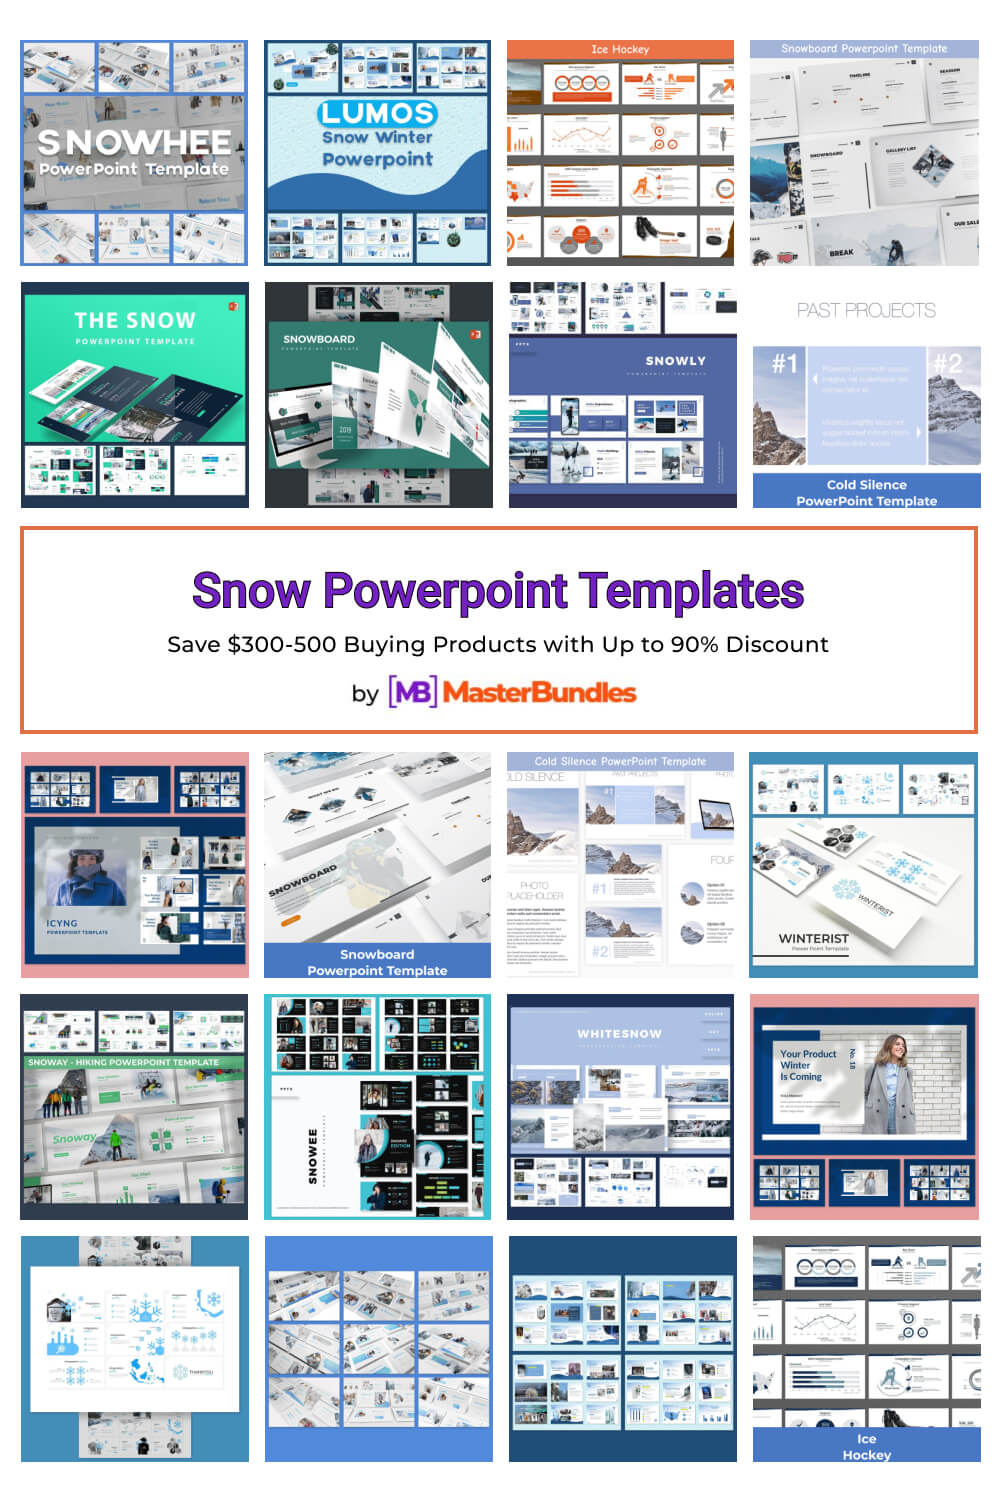 snow powerpoint templates pinterest image.